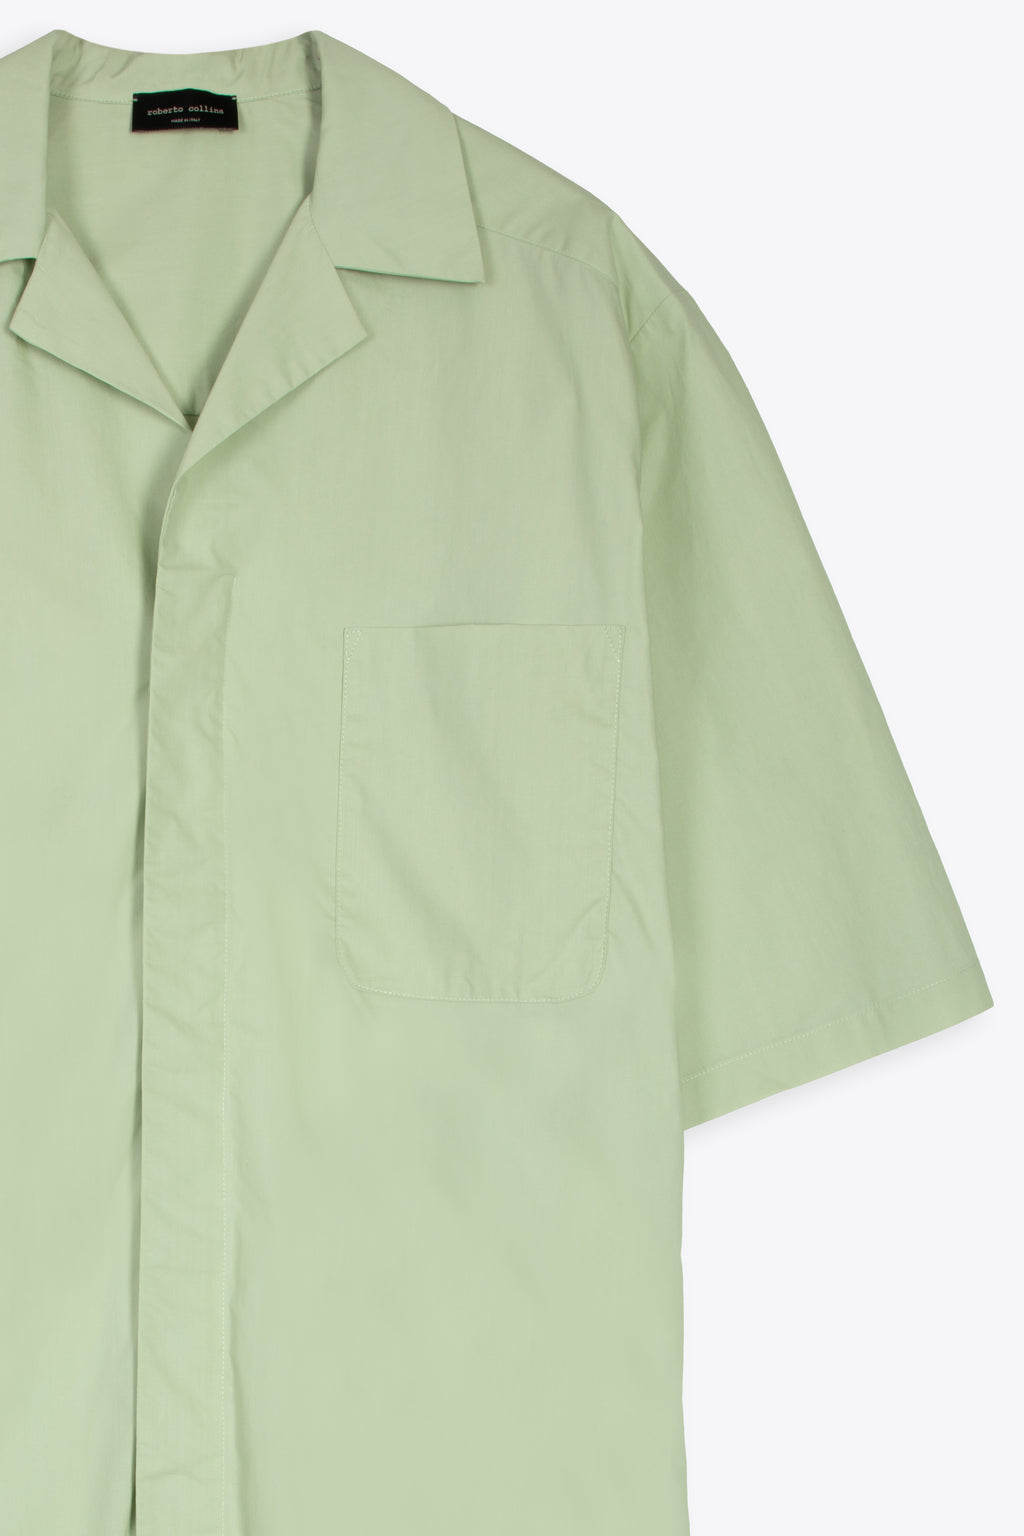 alt-image__Sage-green-poplin-bowling-shirt-with-short-sleeves